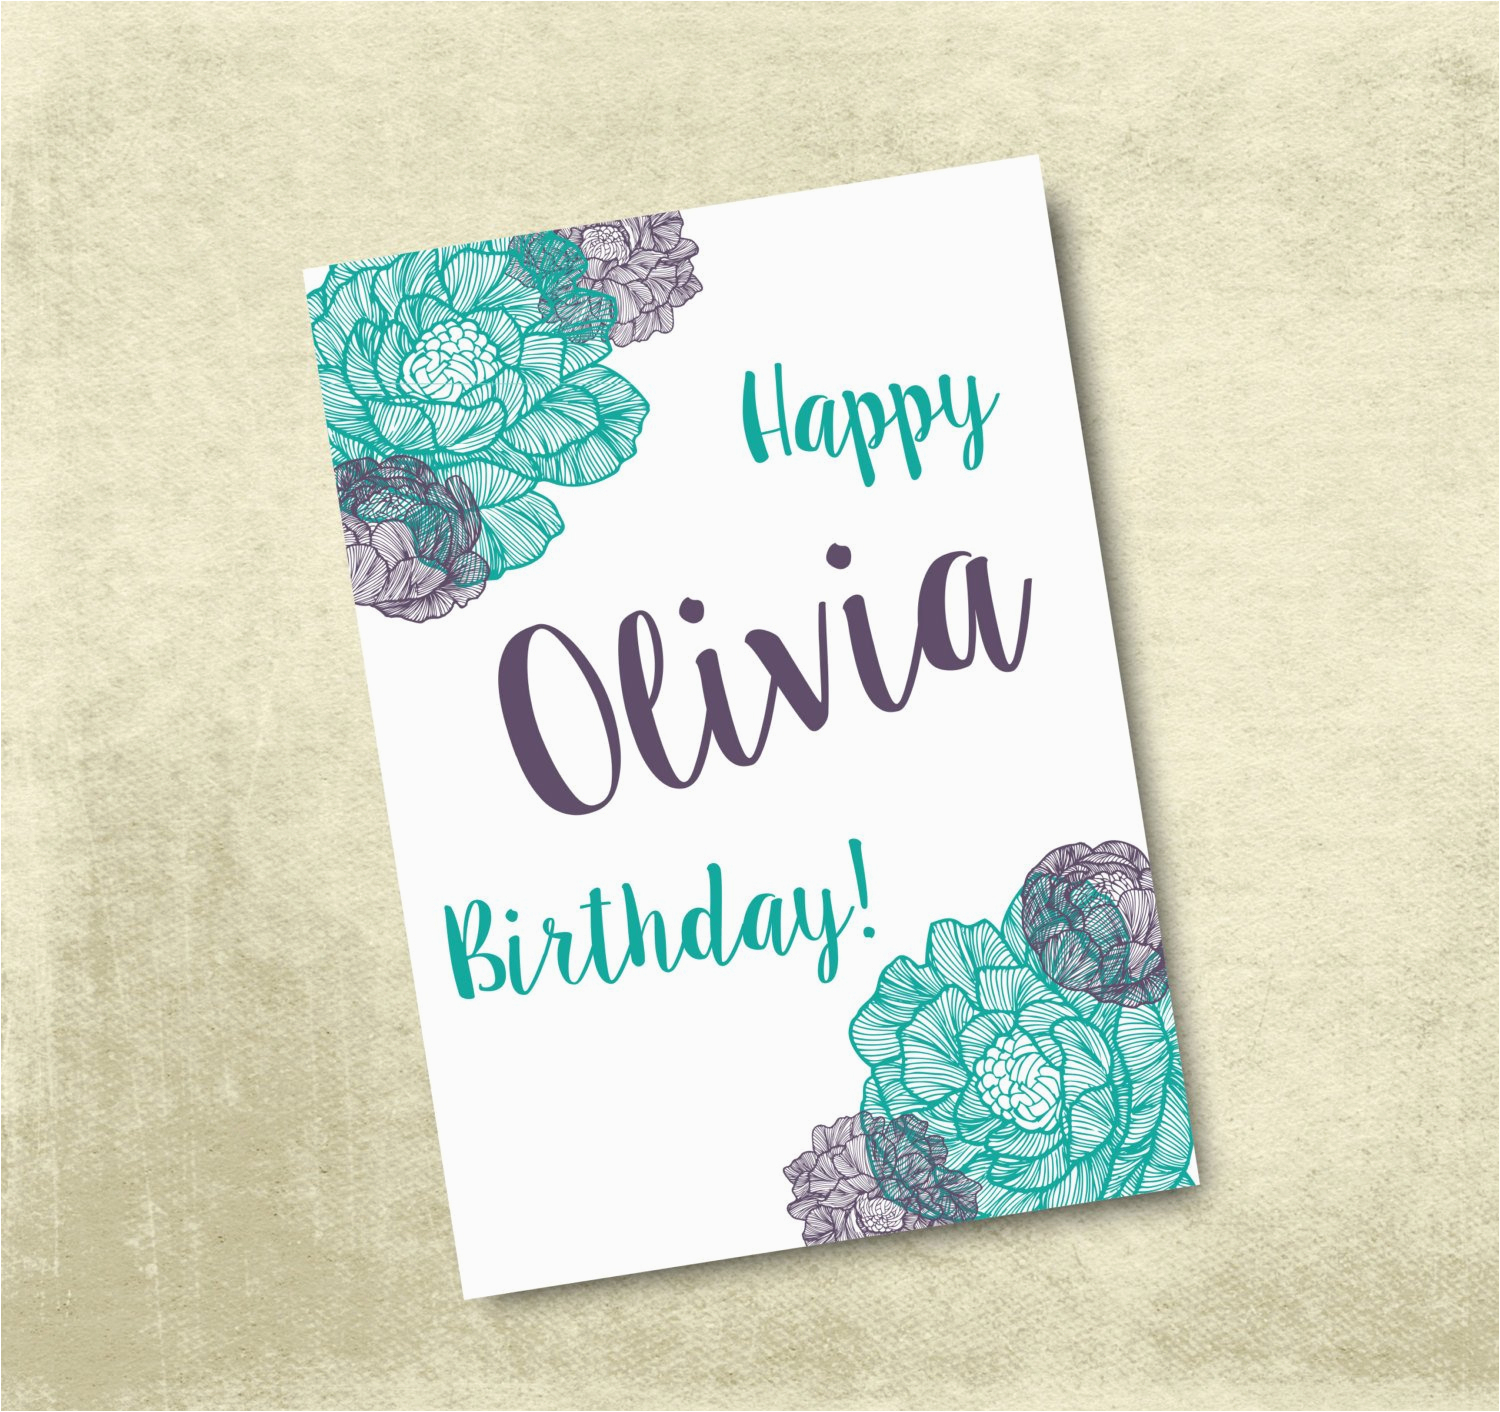 Customized Birthday Cards Free Printable | Birthdaybuzz - Free Printable Personalized Birthday Cards